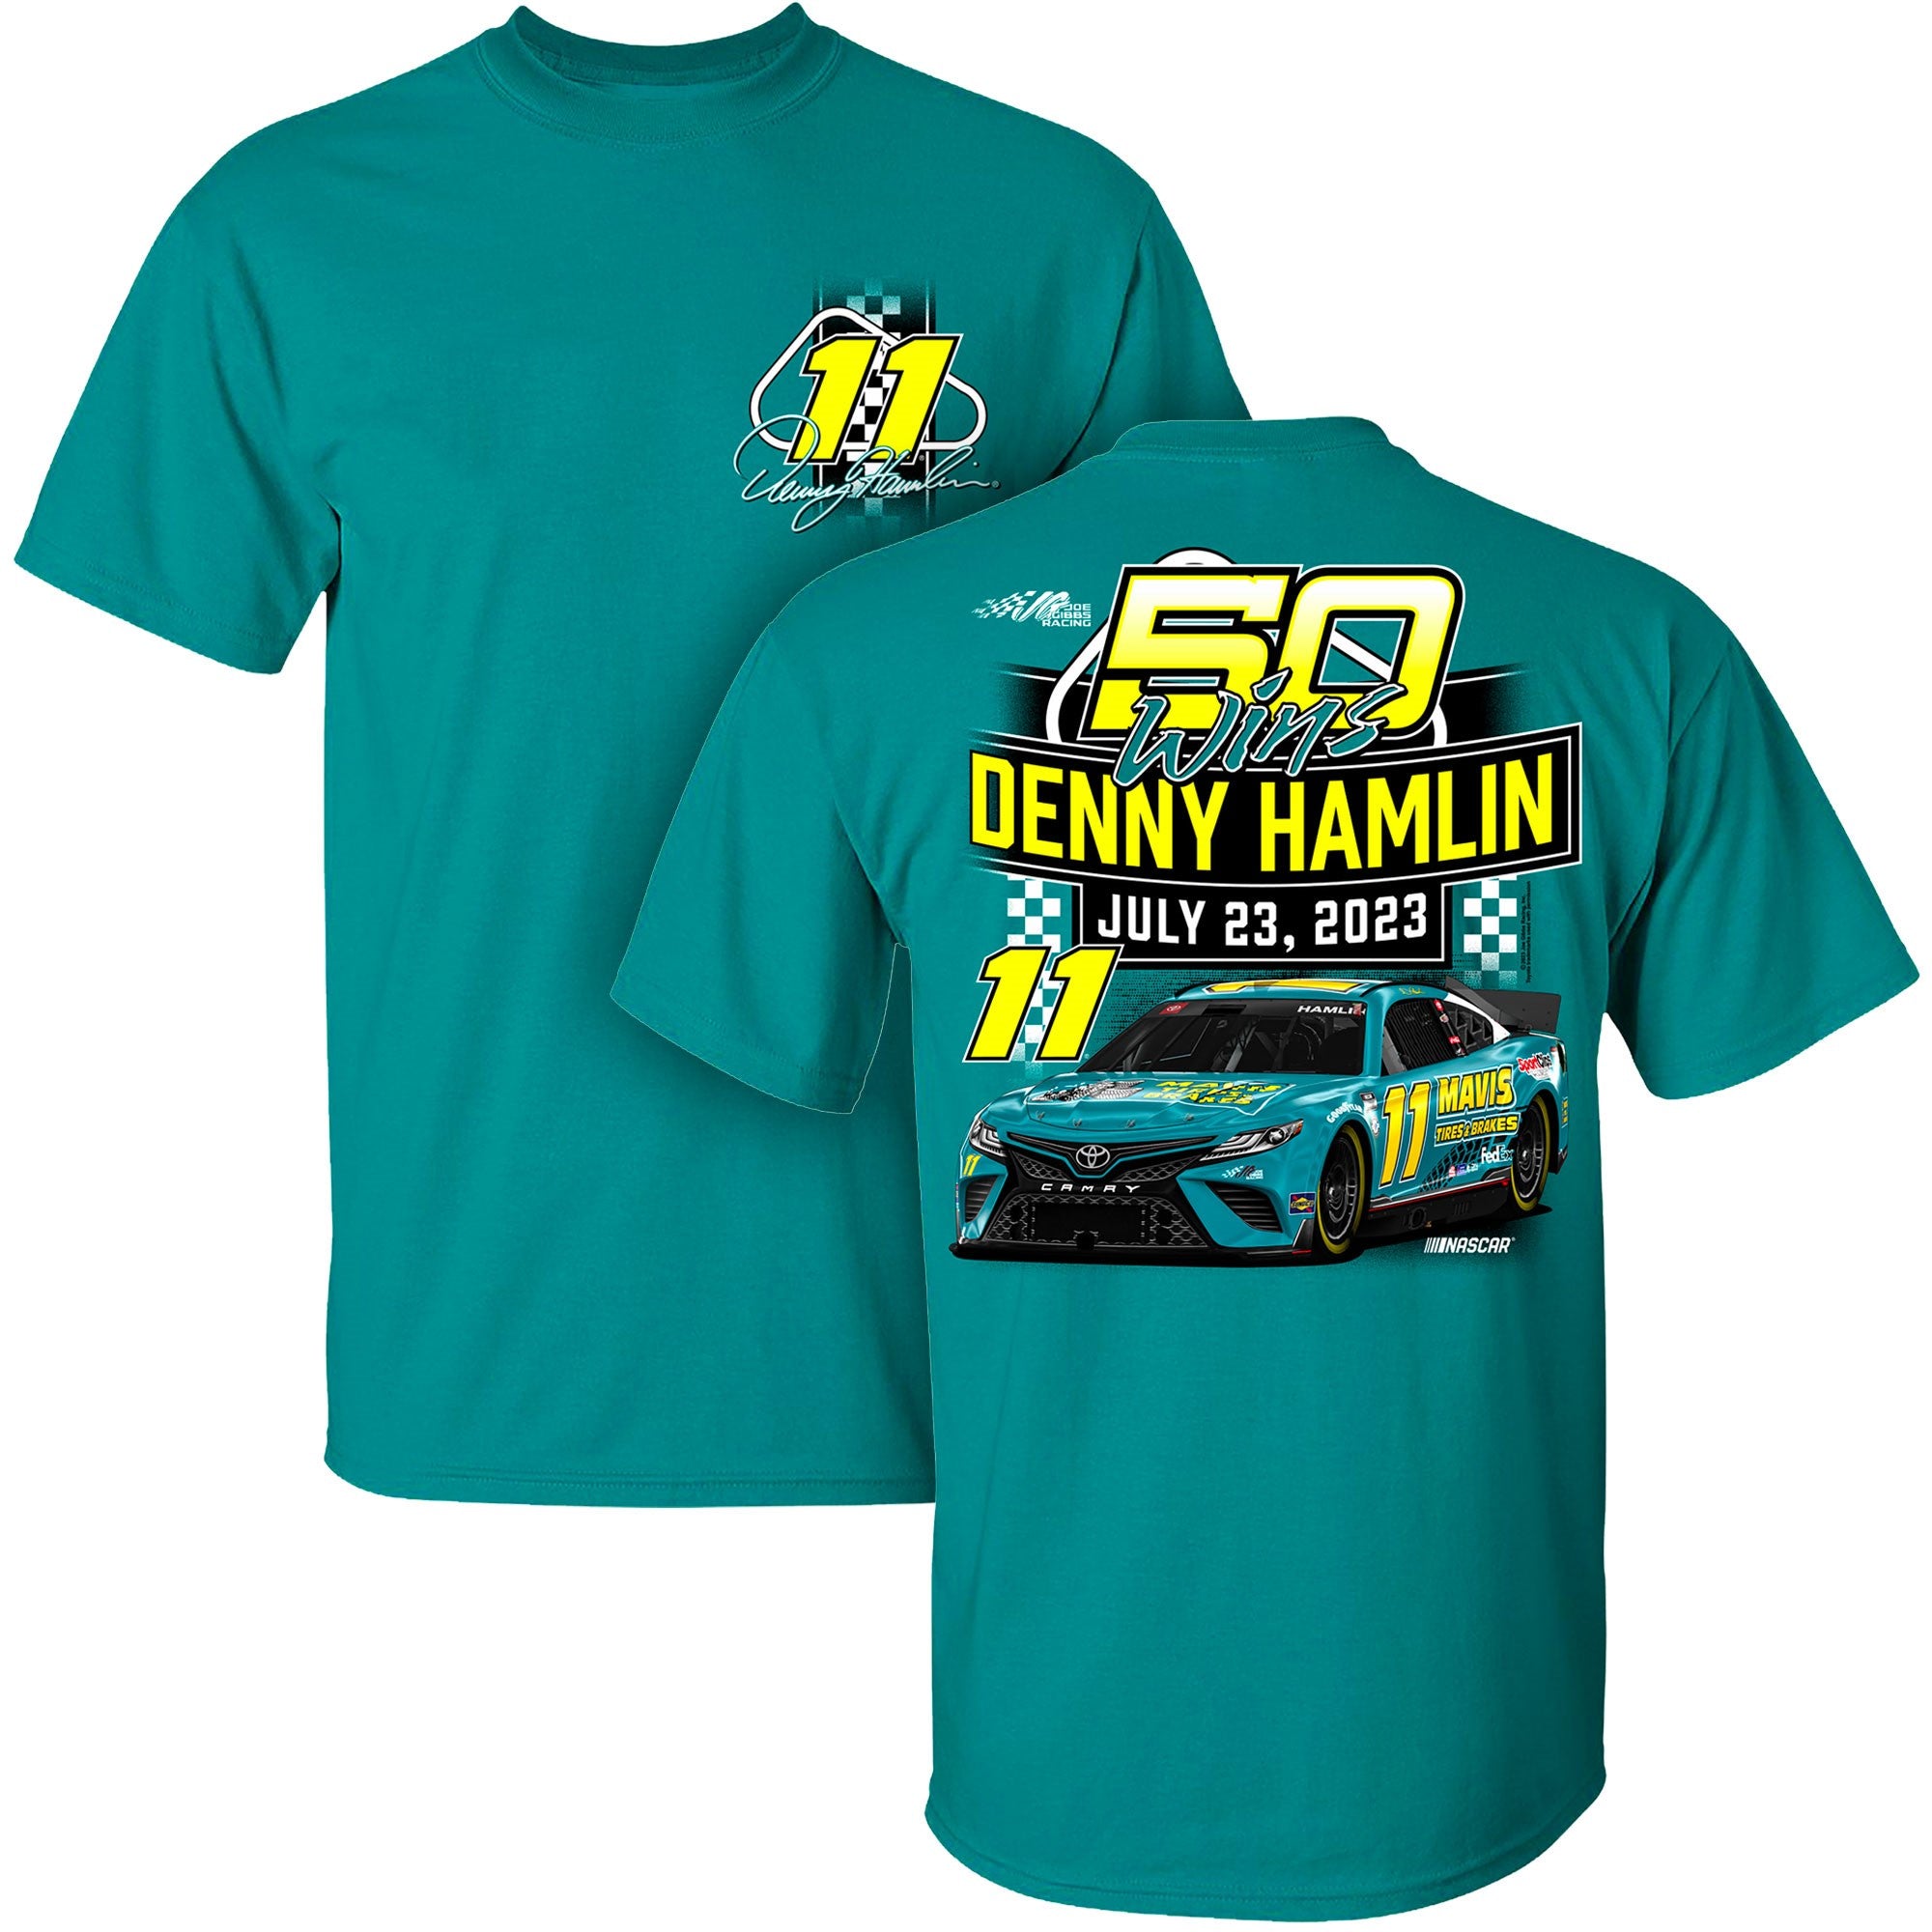 Denny Hamlin gets his record 7th victory at Pocono and 50th of his NASCAR  Cup Series career